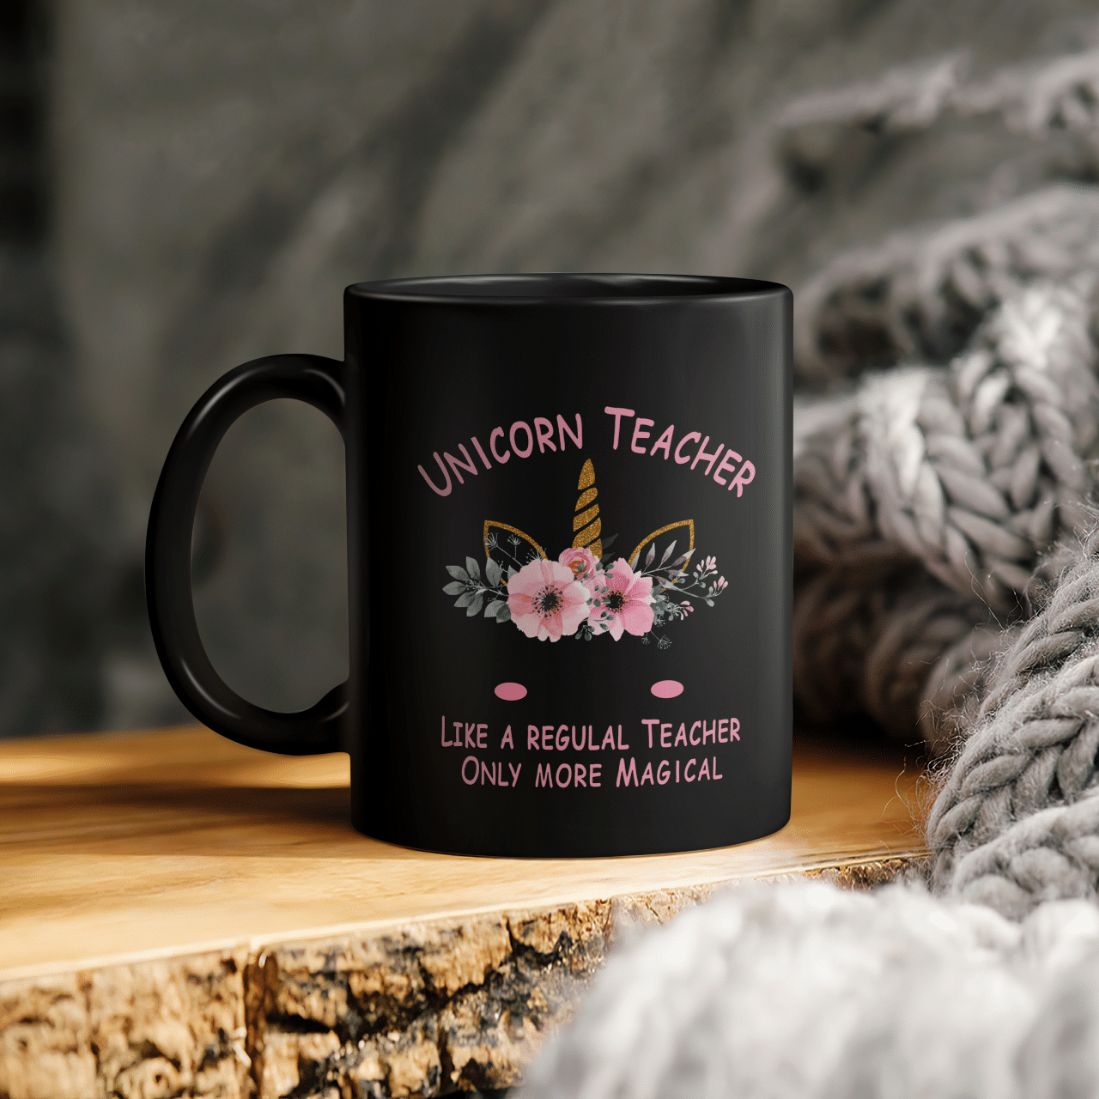 Unicorn Teacher Like A Regular Teacher Only More Magical Ceramic Coffee Mug